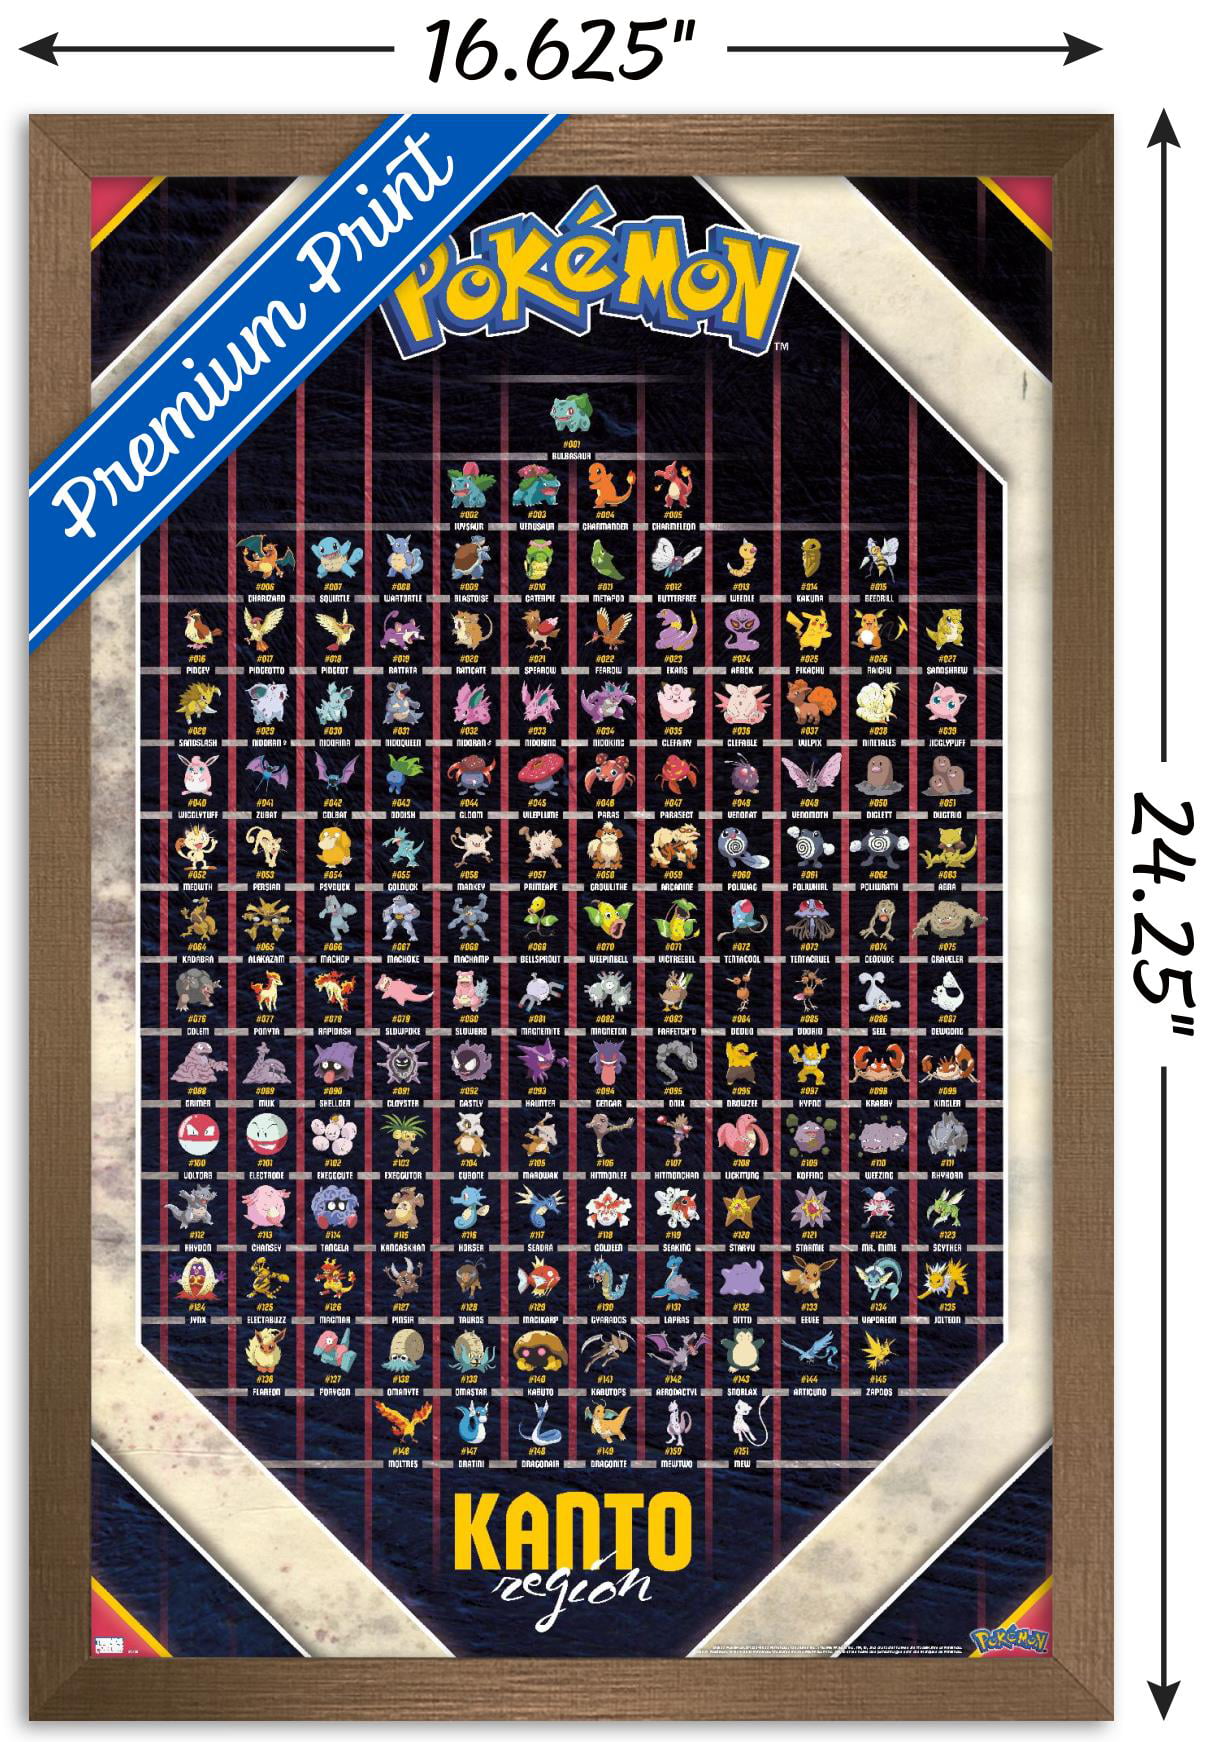 The Official National Pokedex: Pokemon Ultra Sun & Pokemon Ultra Moon  Edition